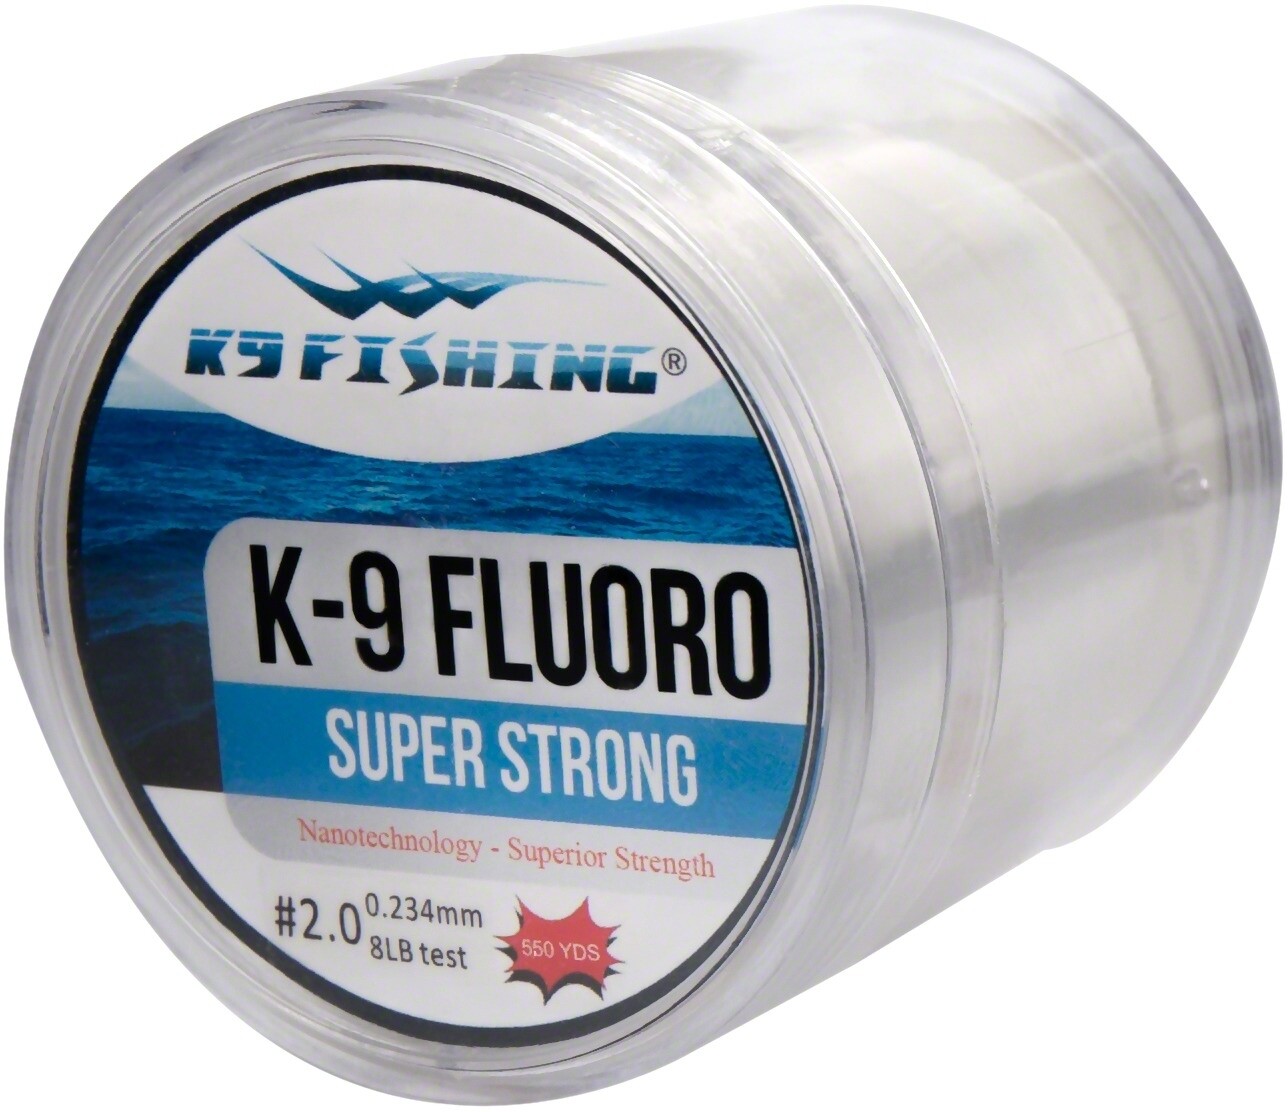 K9 550-12lb-CL Clear Fluoro Line 550 yard spool 12lb test